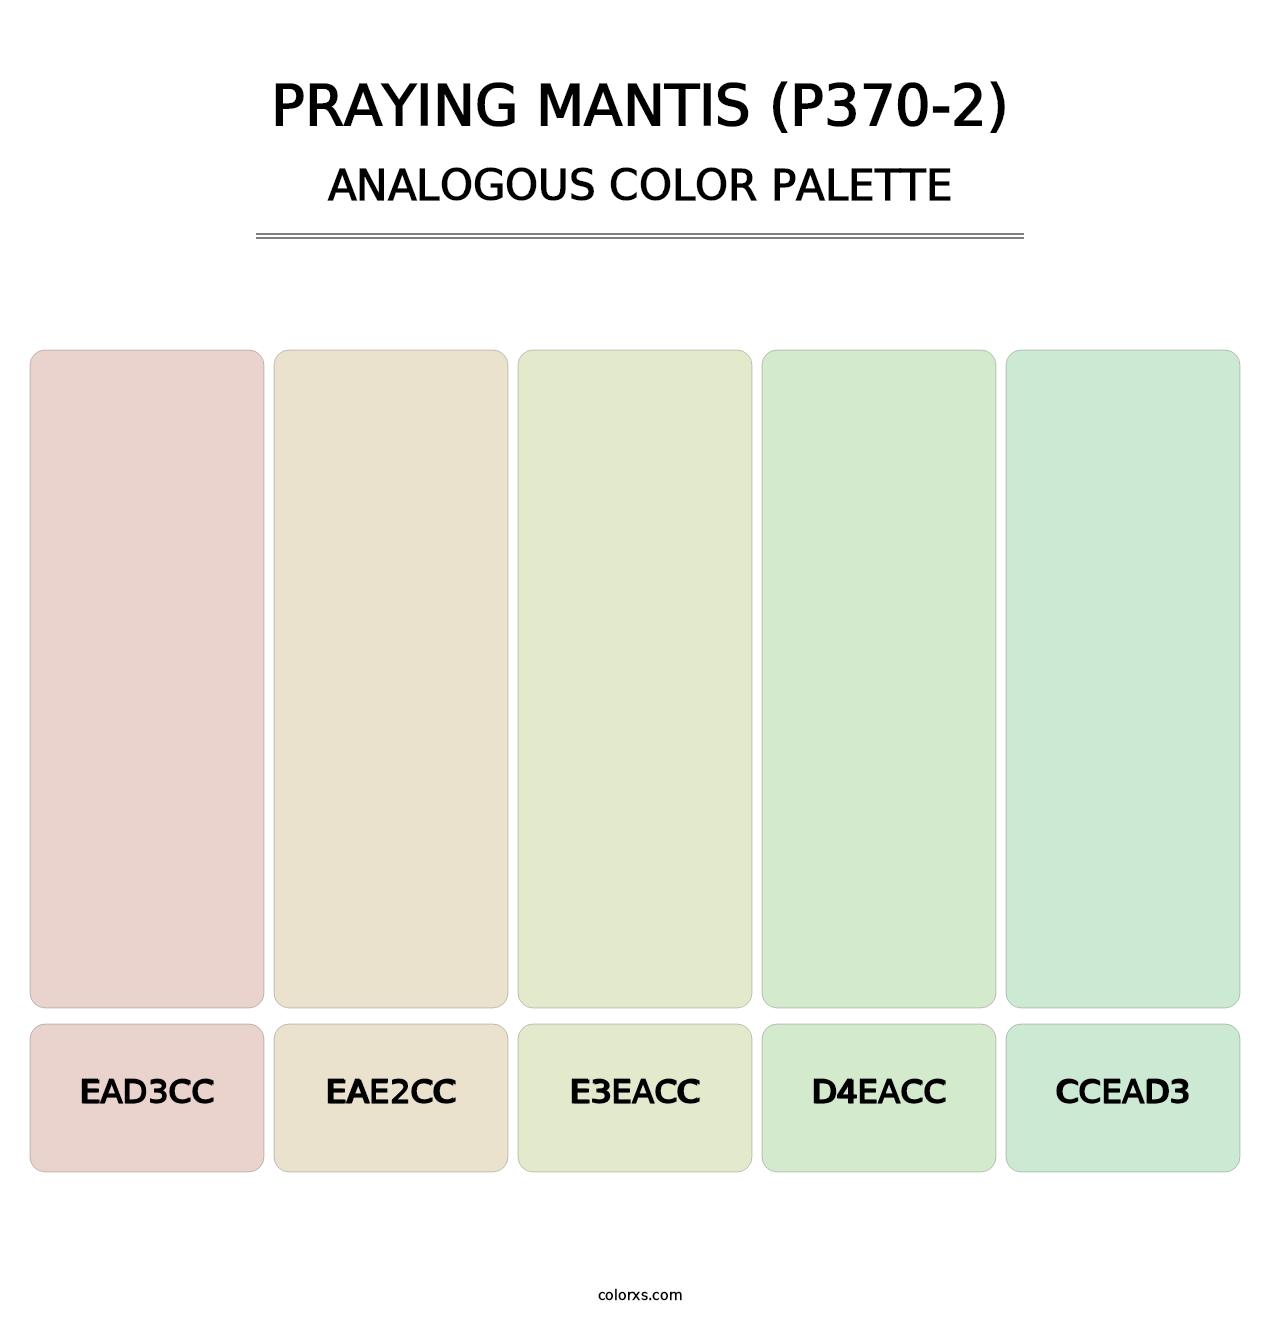 Praying Mantis (P370-2) - Analogous Color Palette